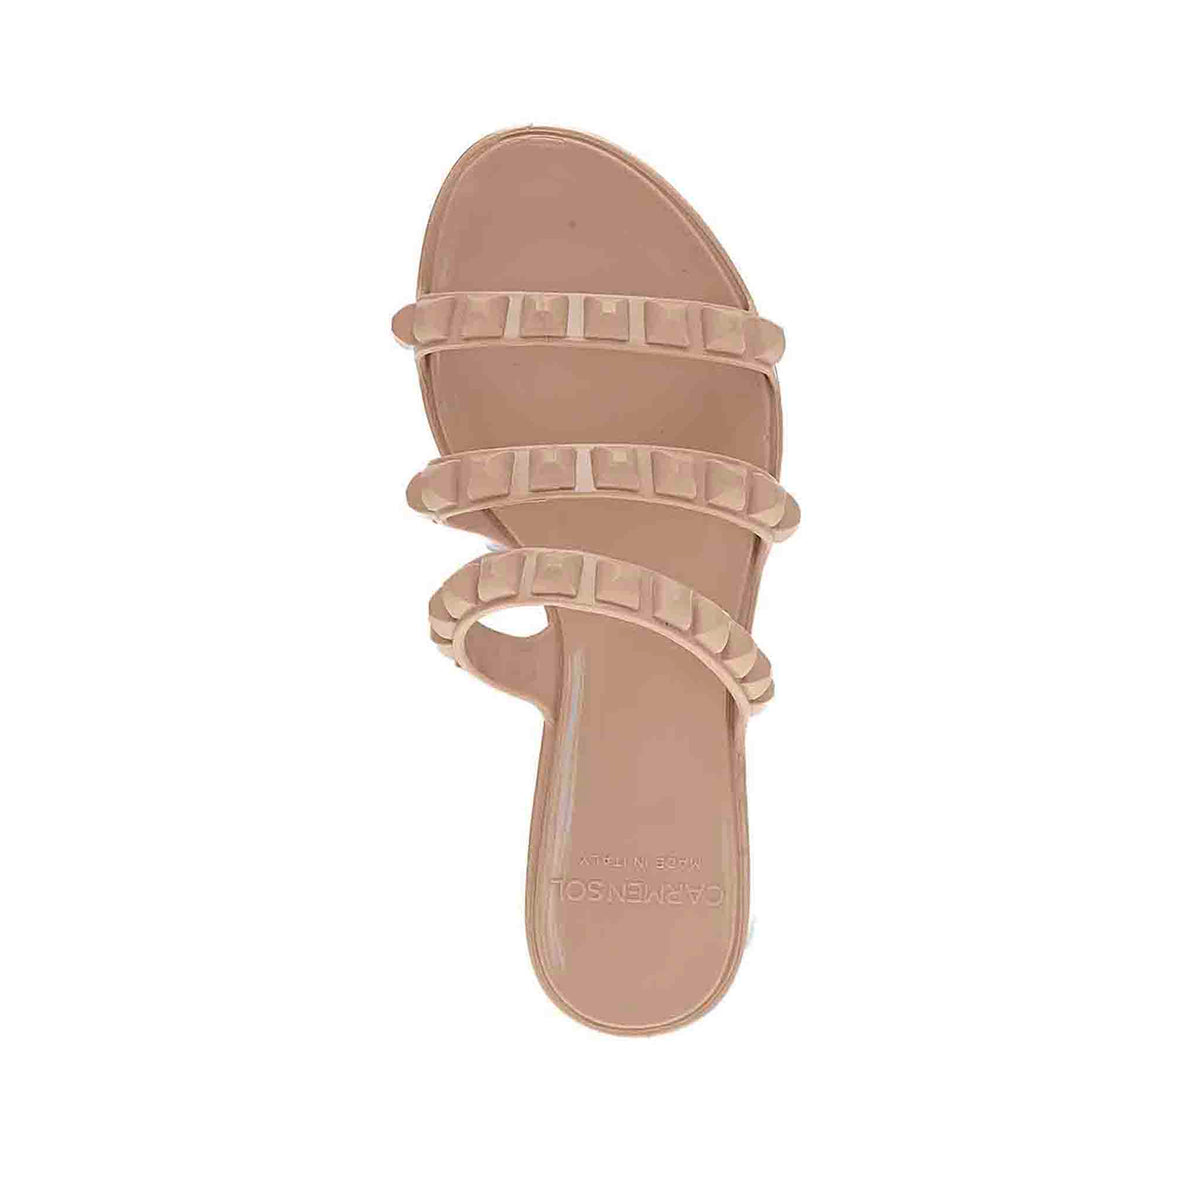 Maria 3 Strap Flat Jelly Sandals